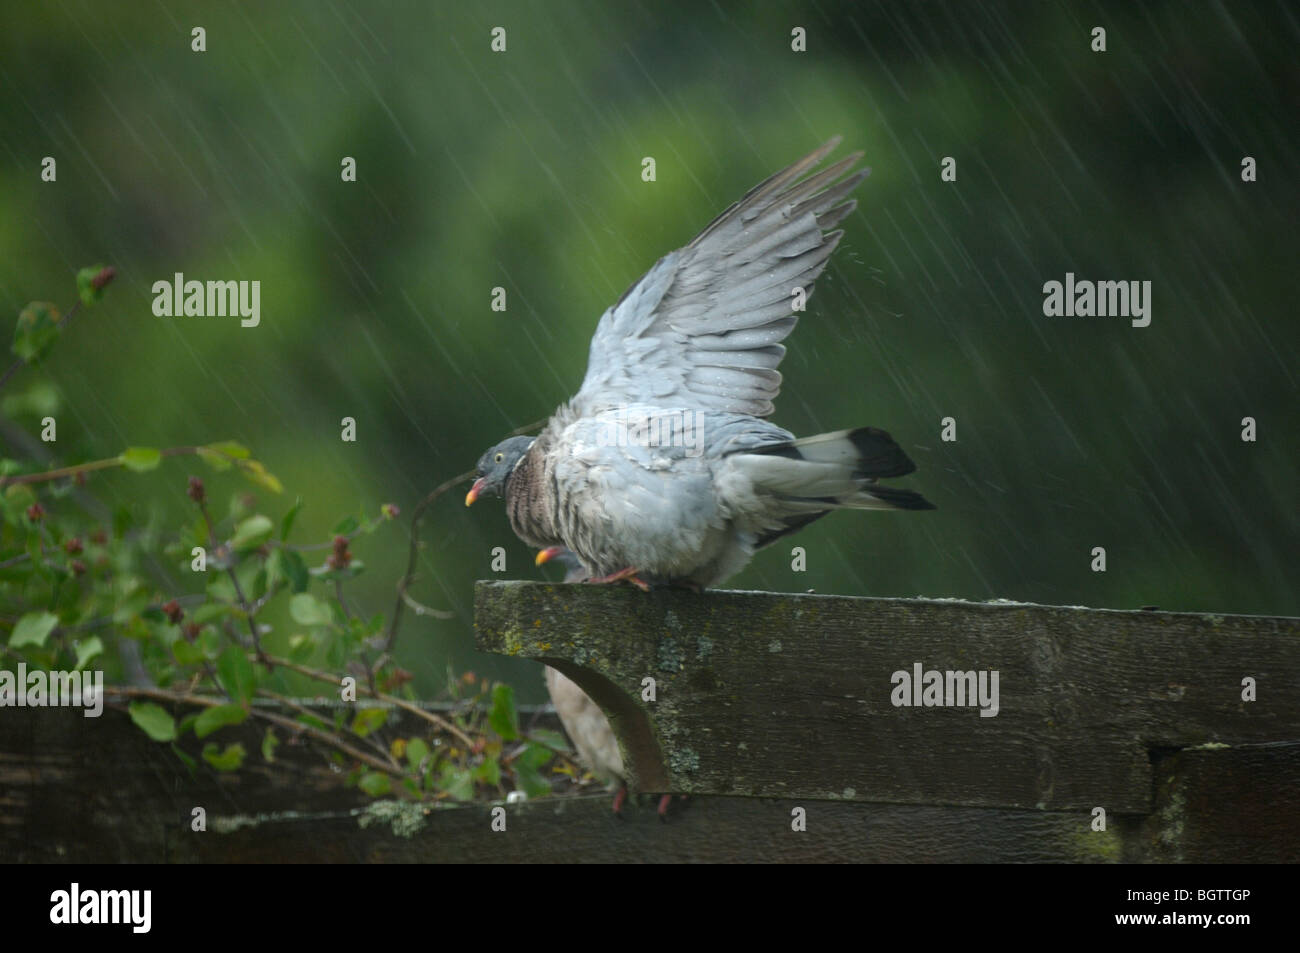 Woodpigeon (Columba palumbus) bird stretching its wing during rain to wash, Oxfordshire, UK. Stock Photo